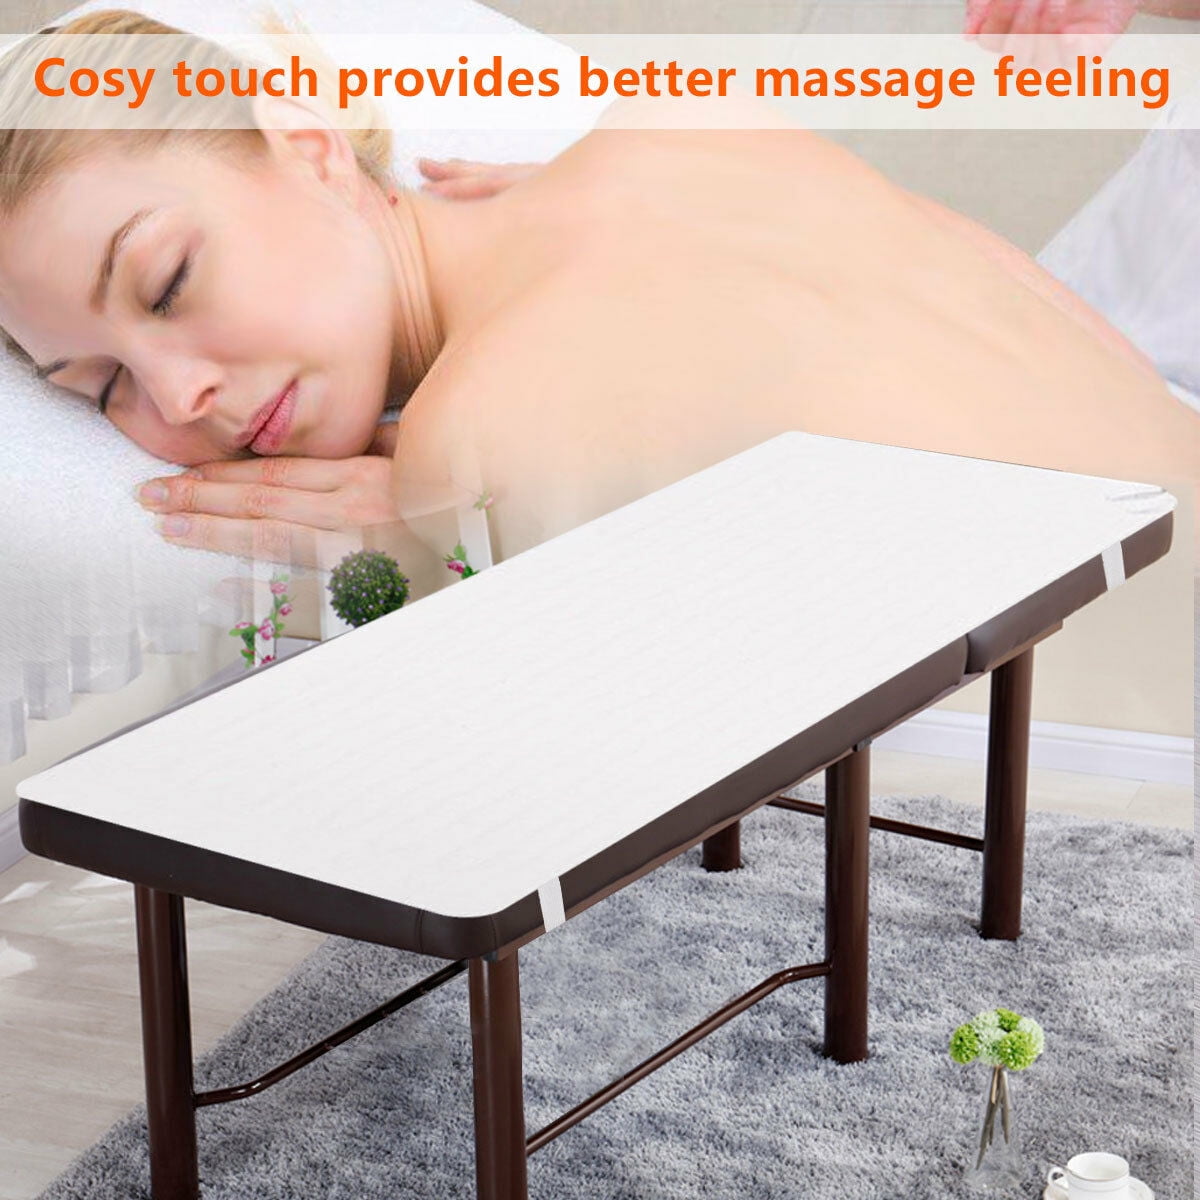 Oudain 2 Sets Massage Table Warmer 31'' x 71'', 6 Heat Manual